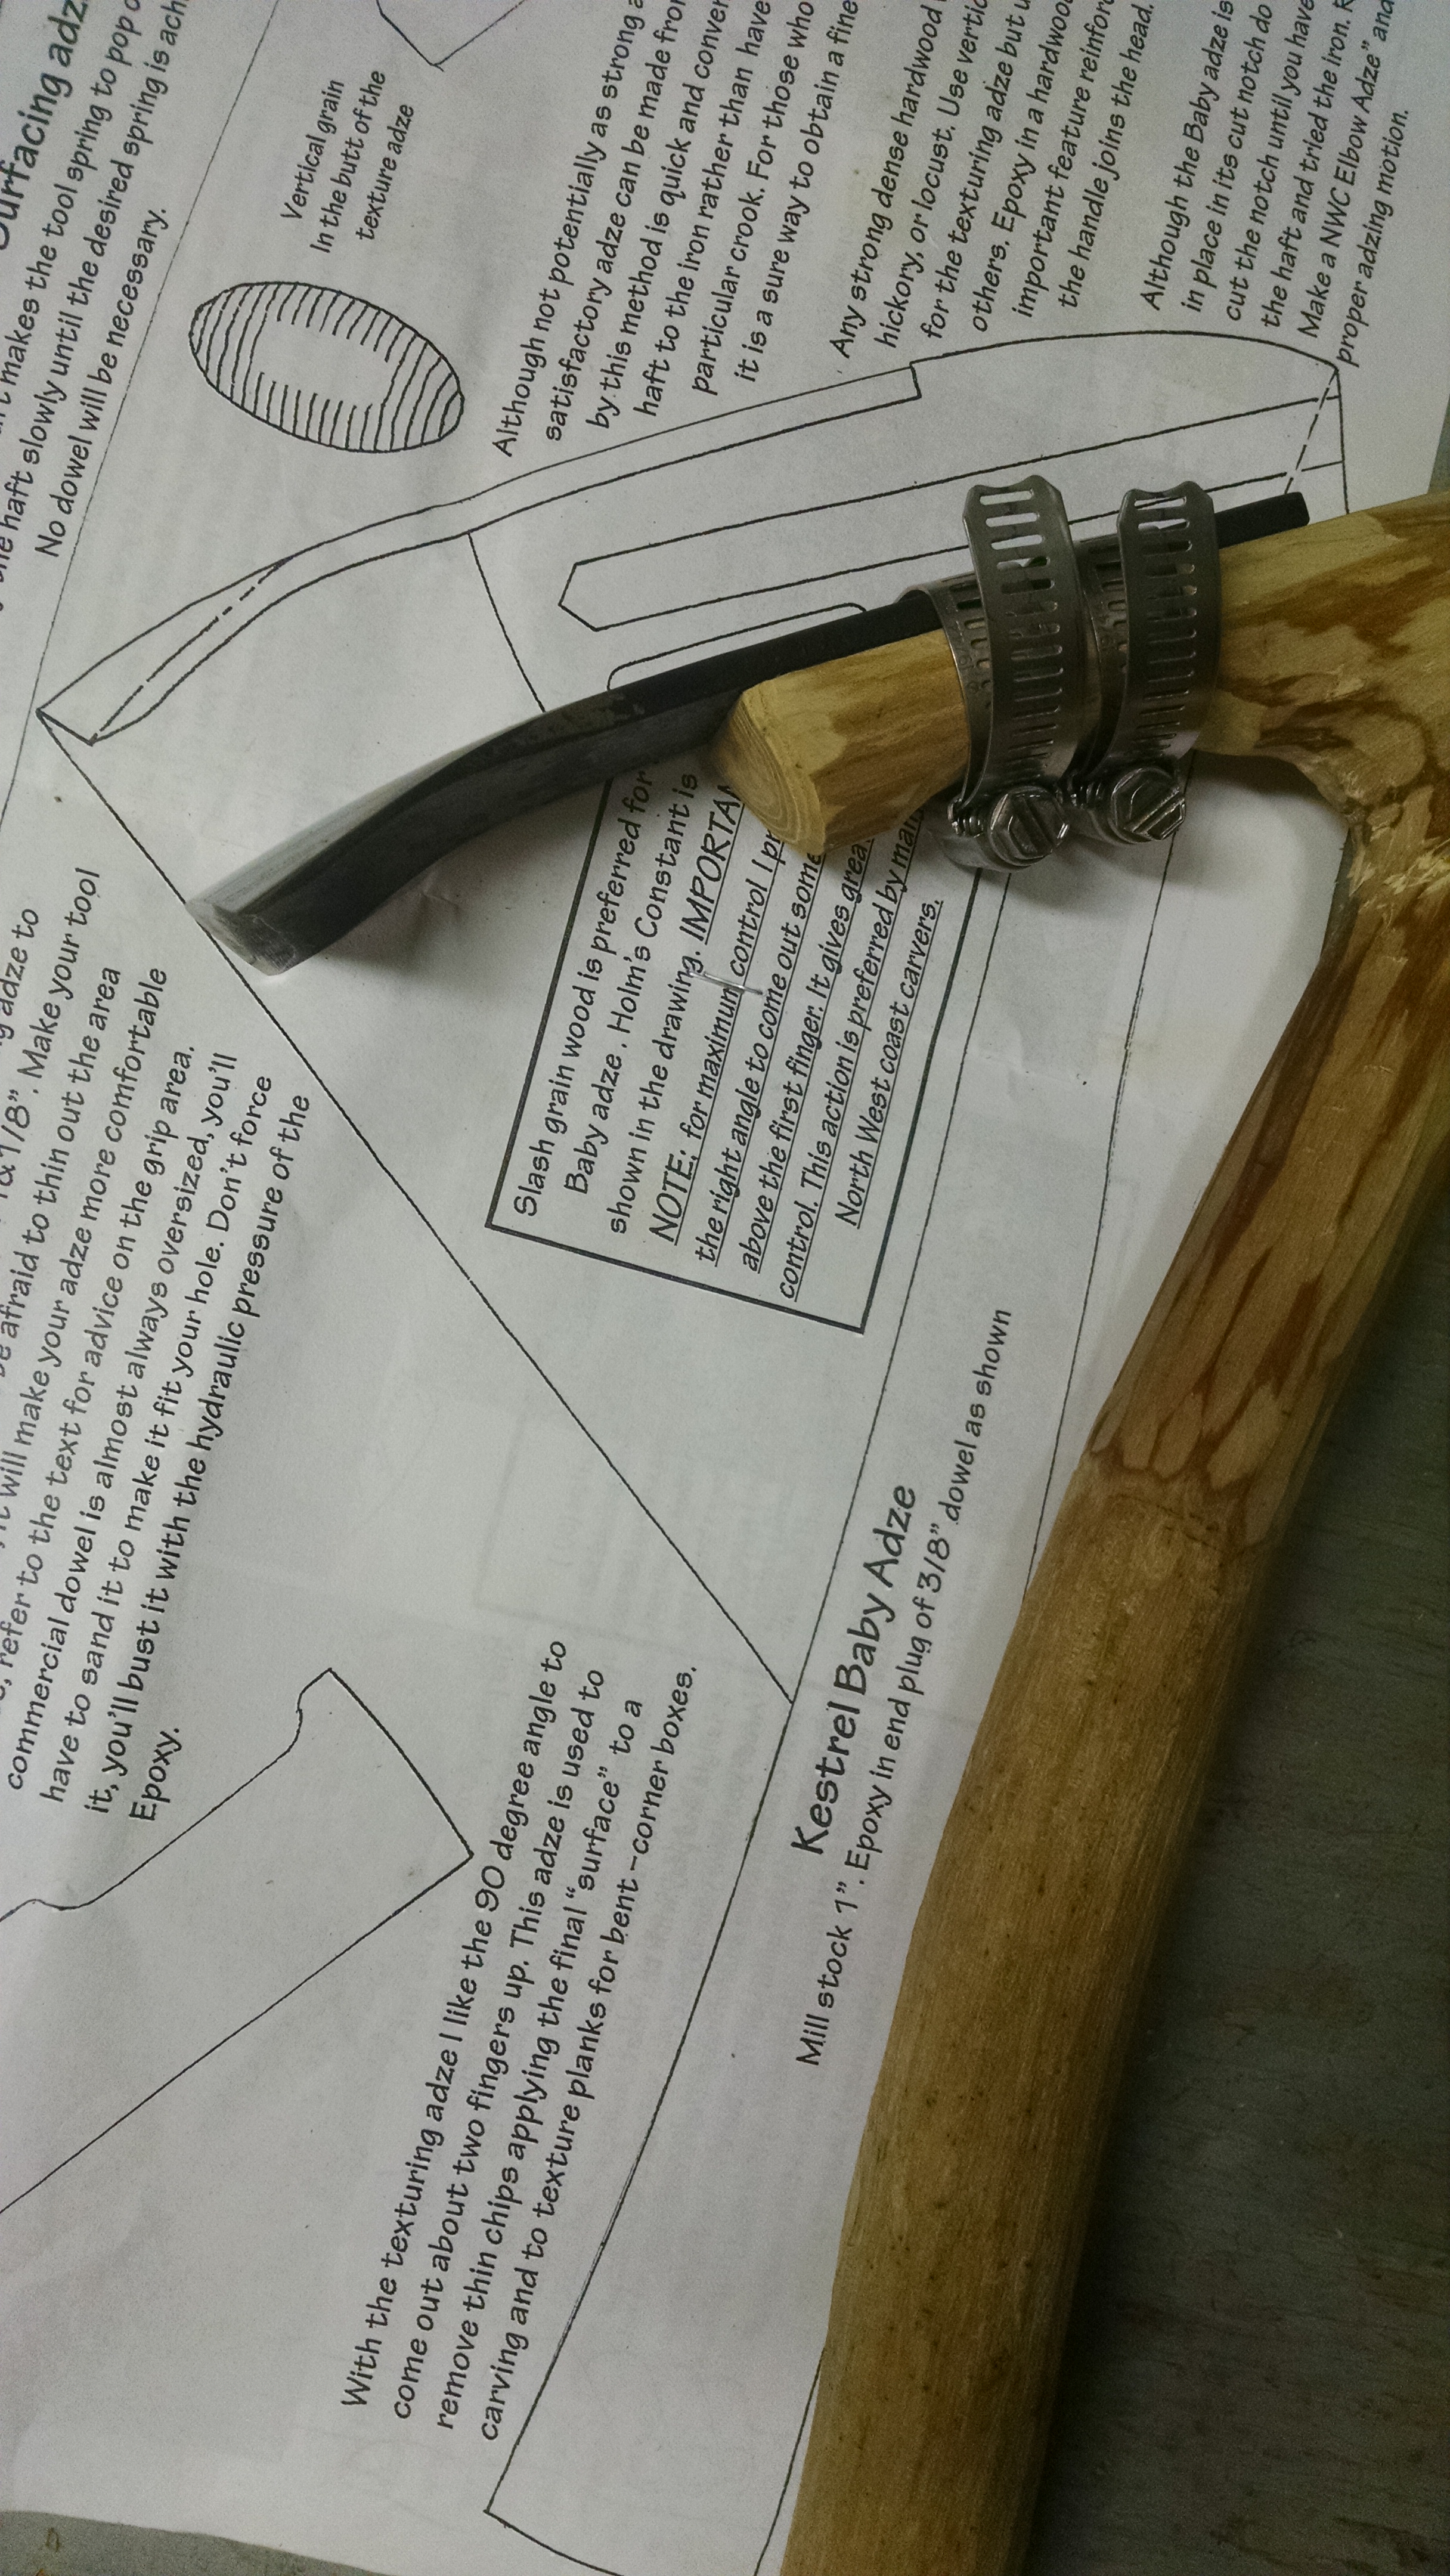 Woodworking tools : 1 : Adze handle made of pine, 2 : Adze blade